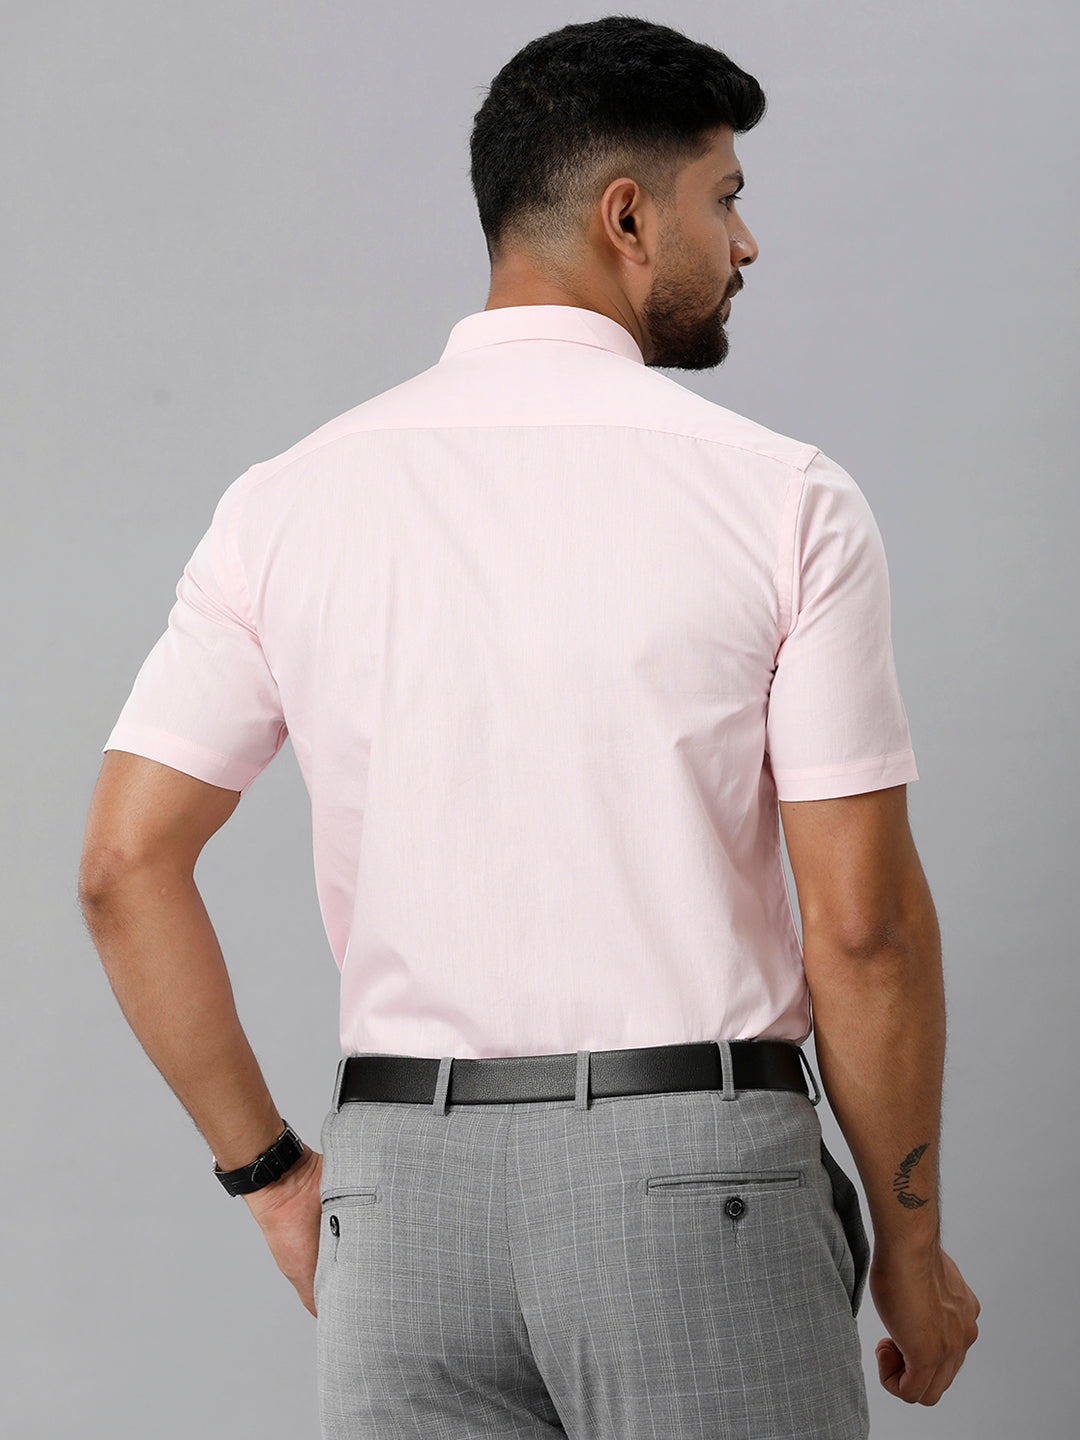 Mens Premium Cotton Formal Shirt Half Sleeves Light Pink MH G115-Back view